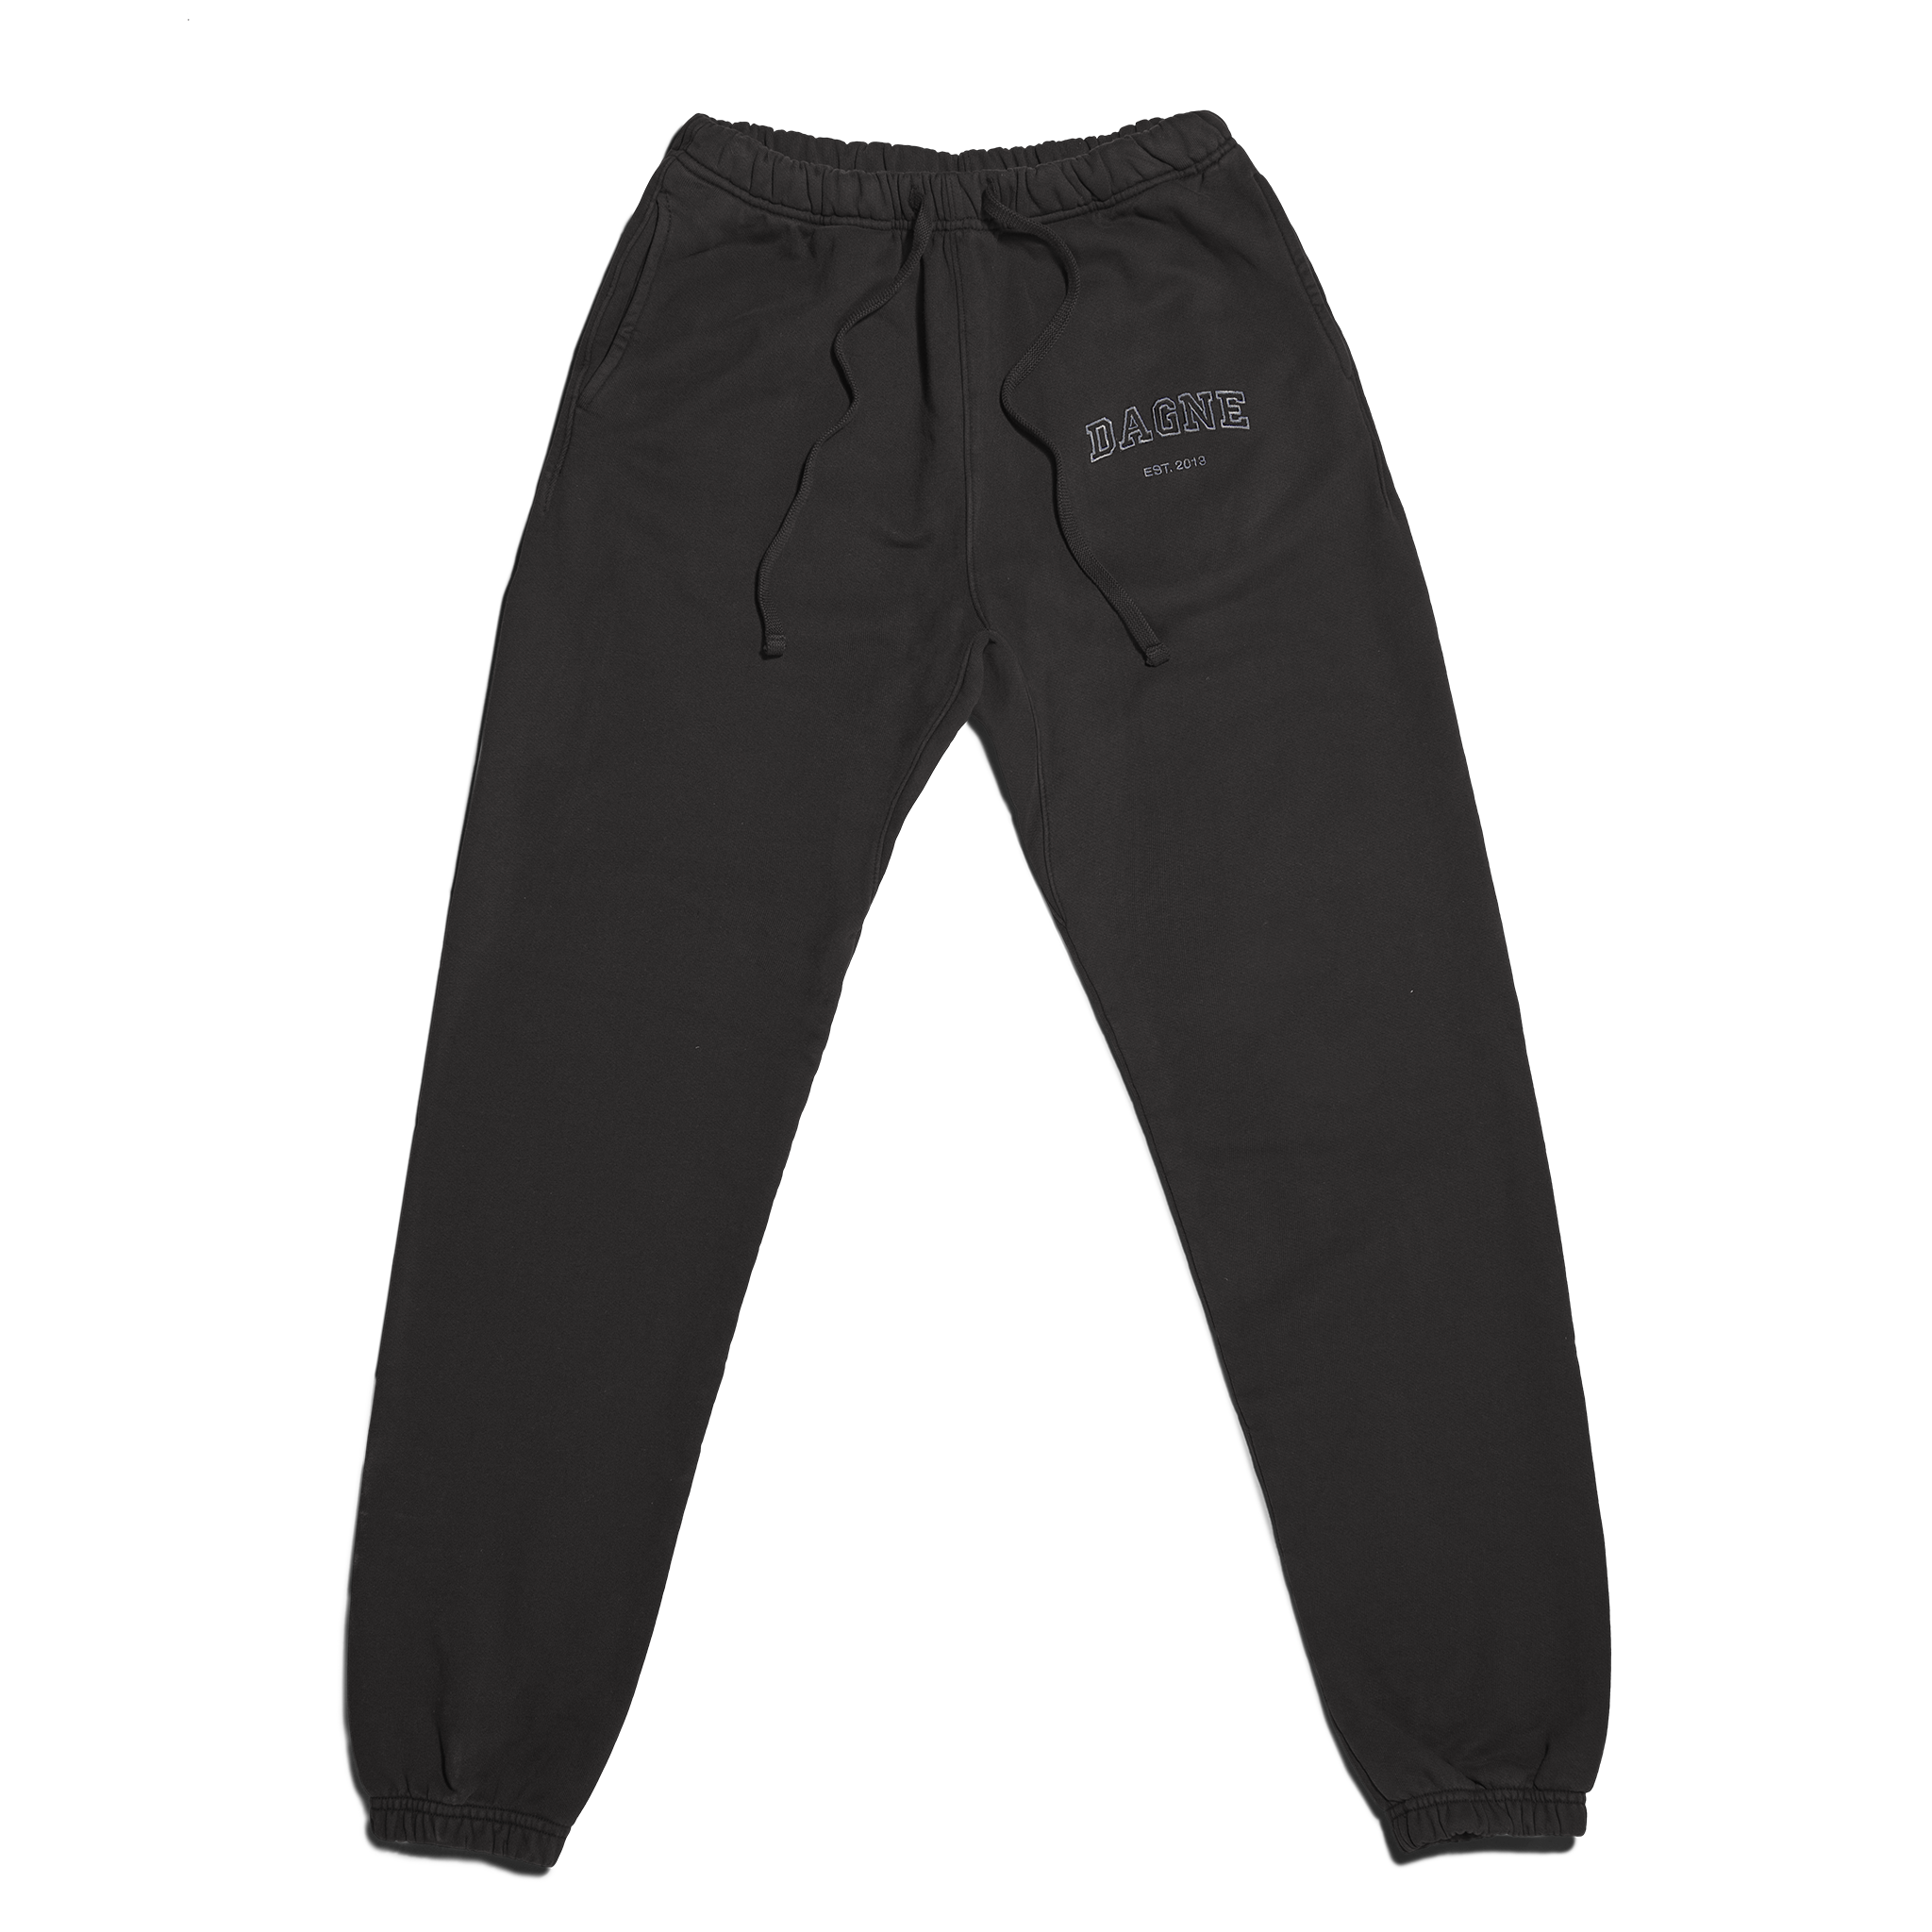 Mens Tracksuit Cargo Sweatpants Pro Club Trousers Jogging Sports Pants  Bottoms